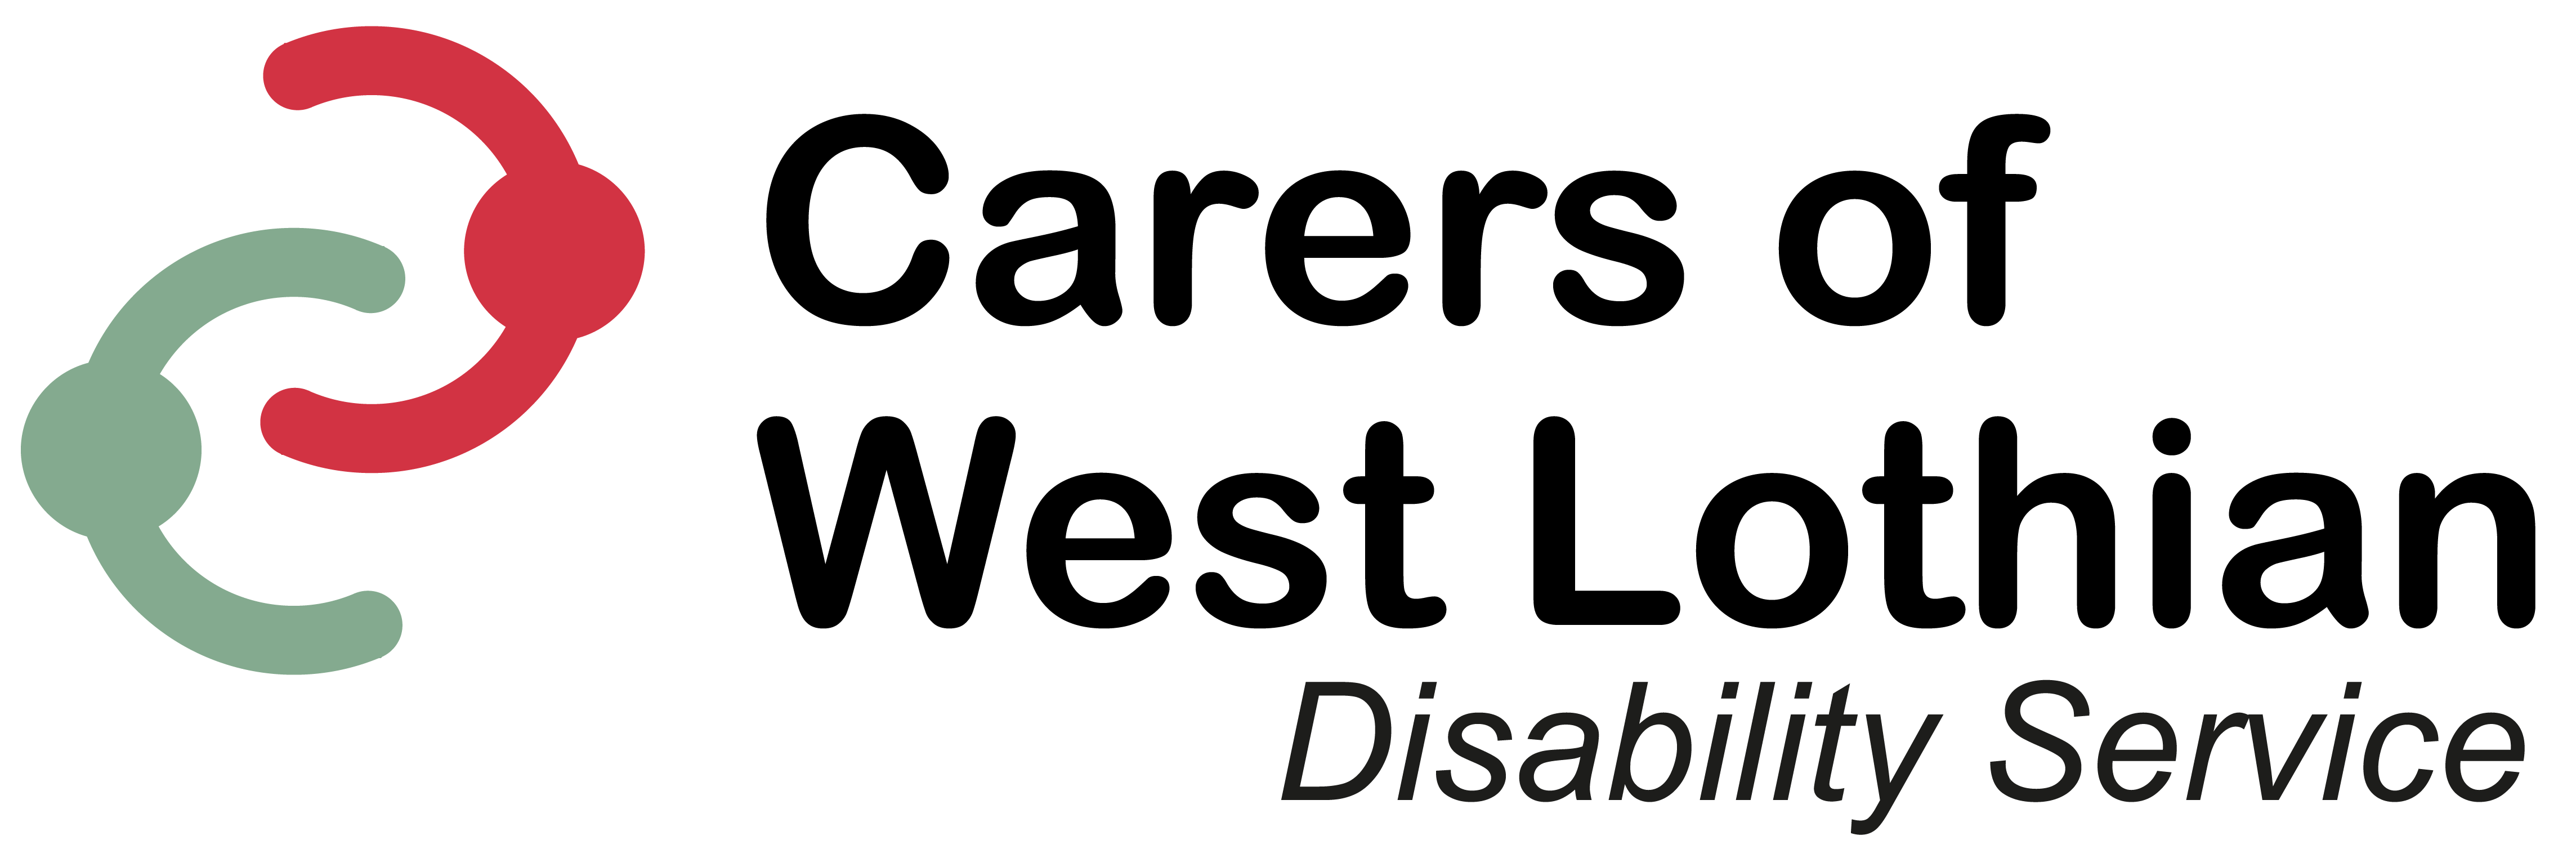 Disability Service Logo